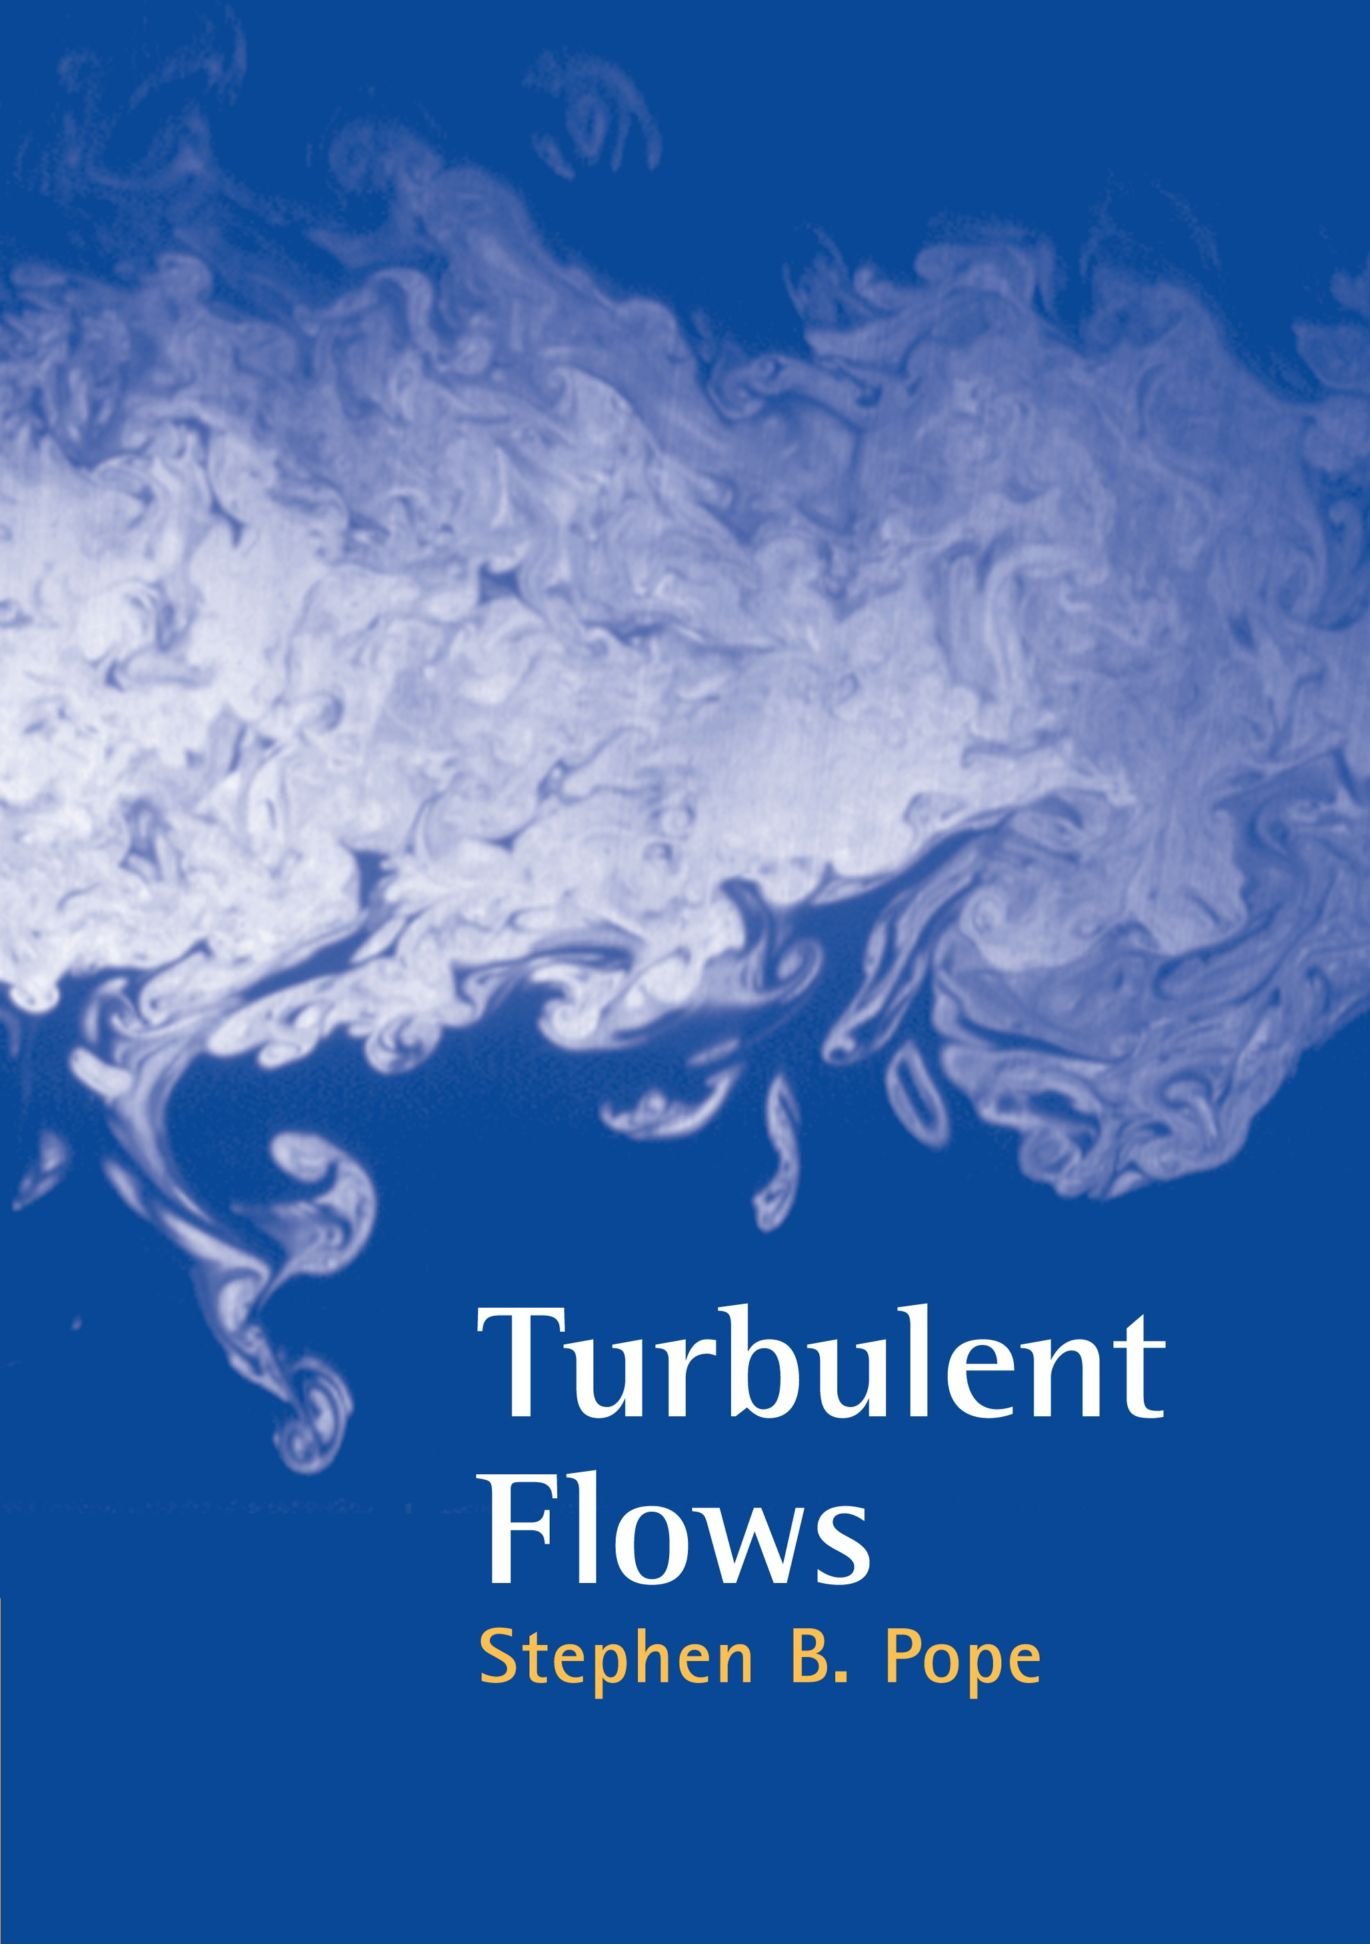 Amazon.fr - Turbulent Flows - Stephen B. Pope - Livres